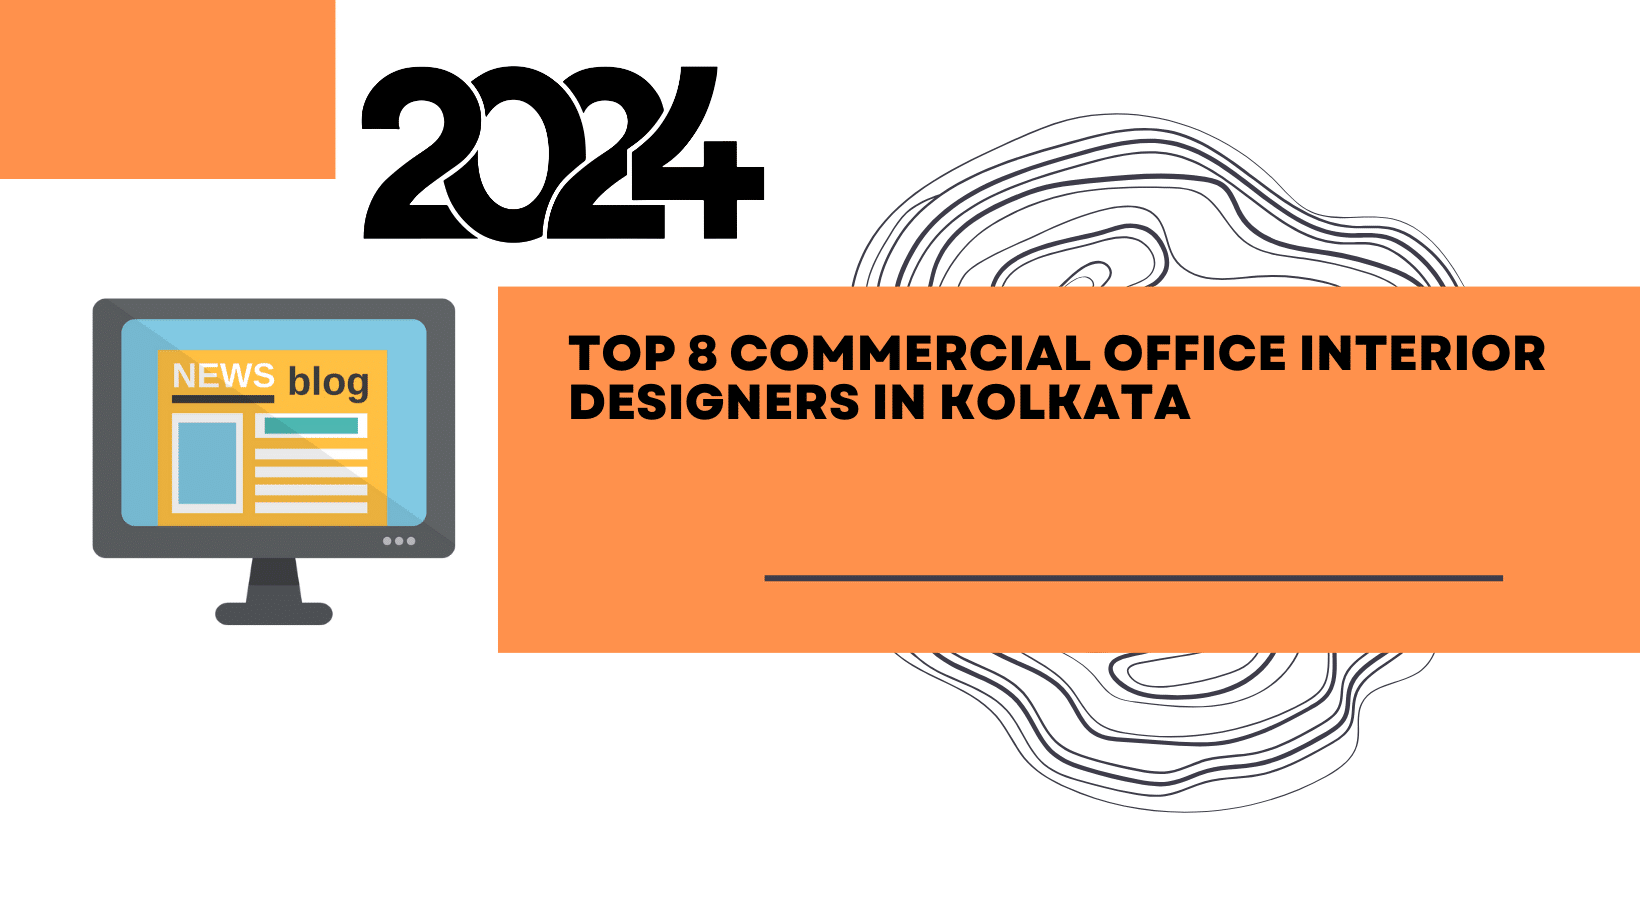 Top 8 Commercial Office Interior Designers in Kolkata